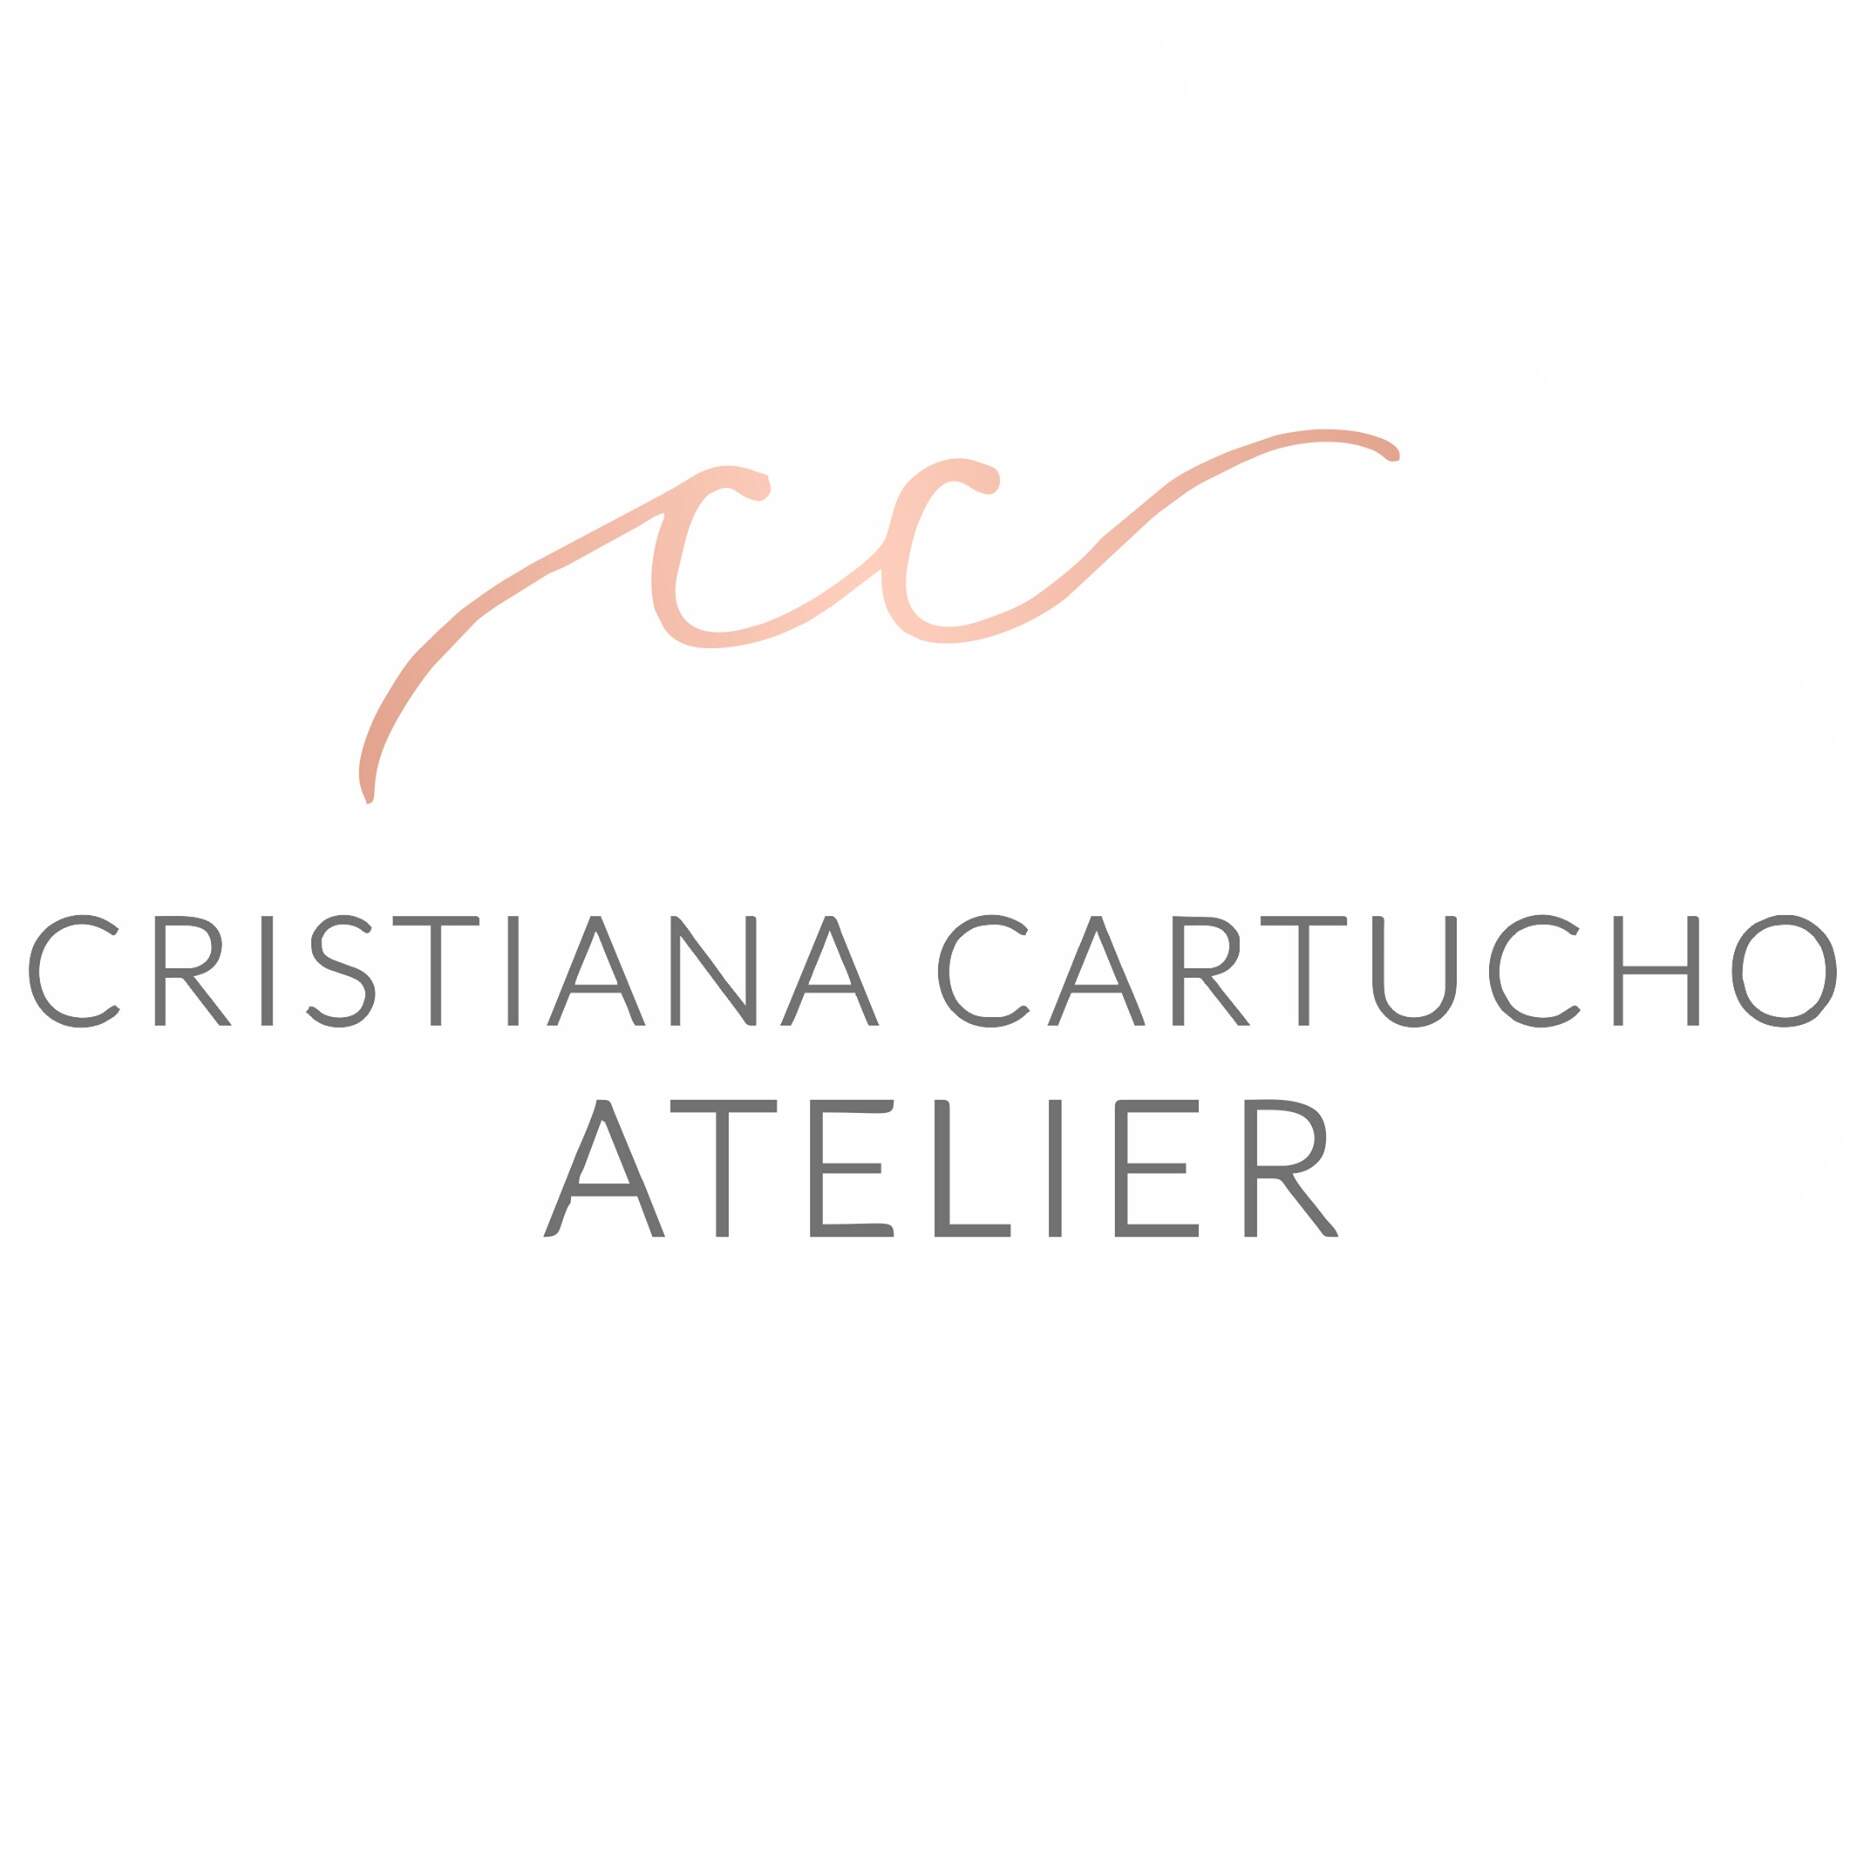 Cristiana Cartucho